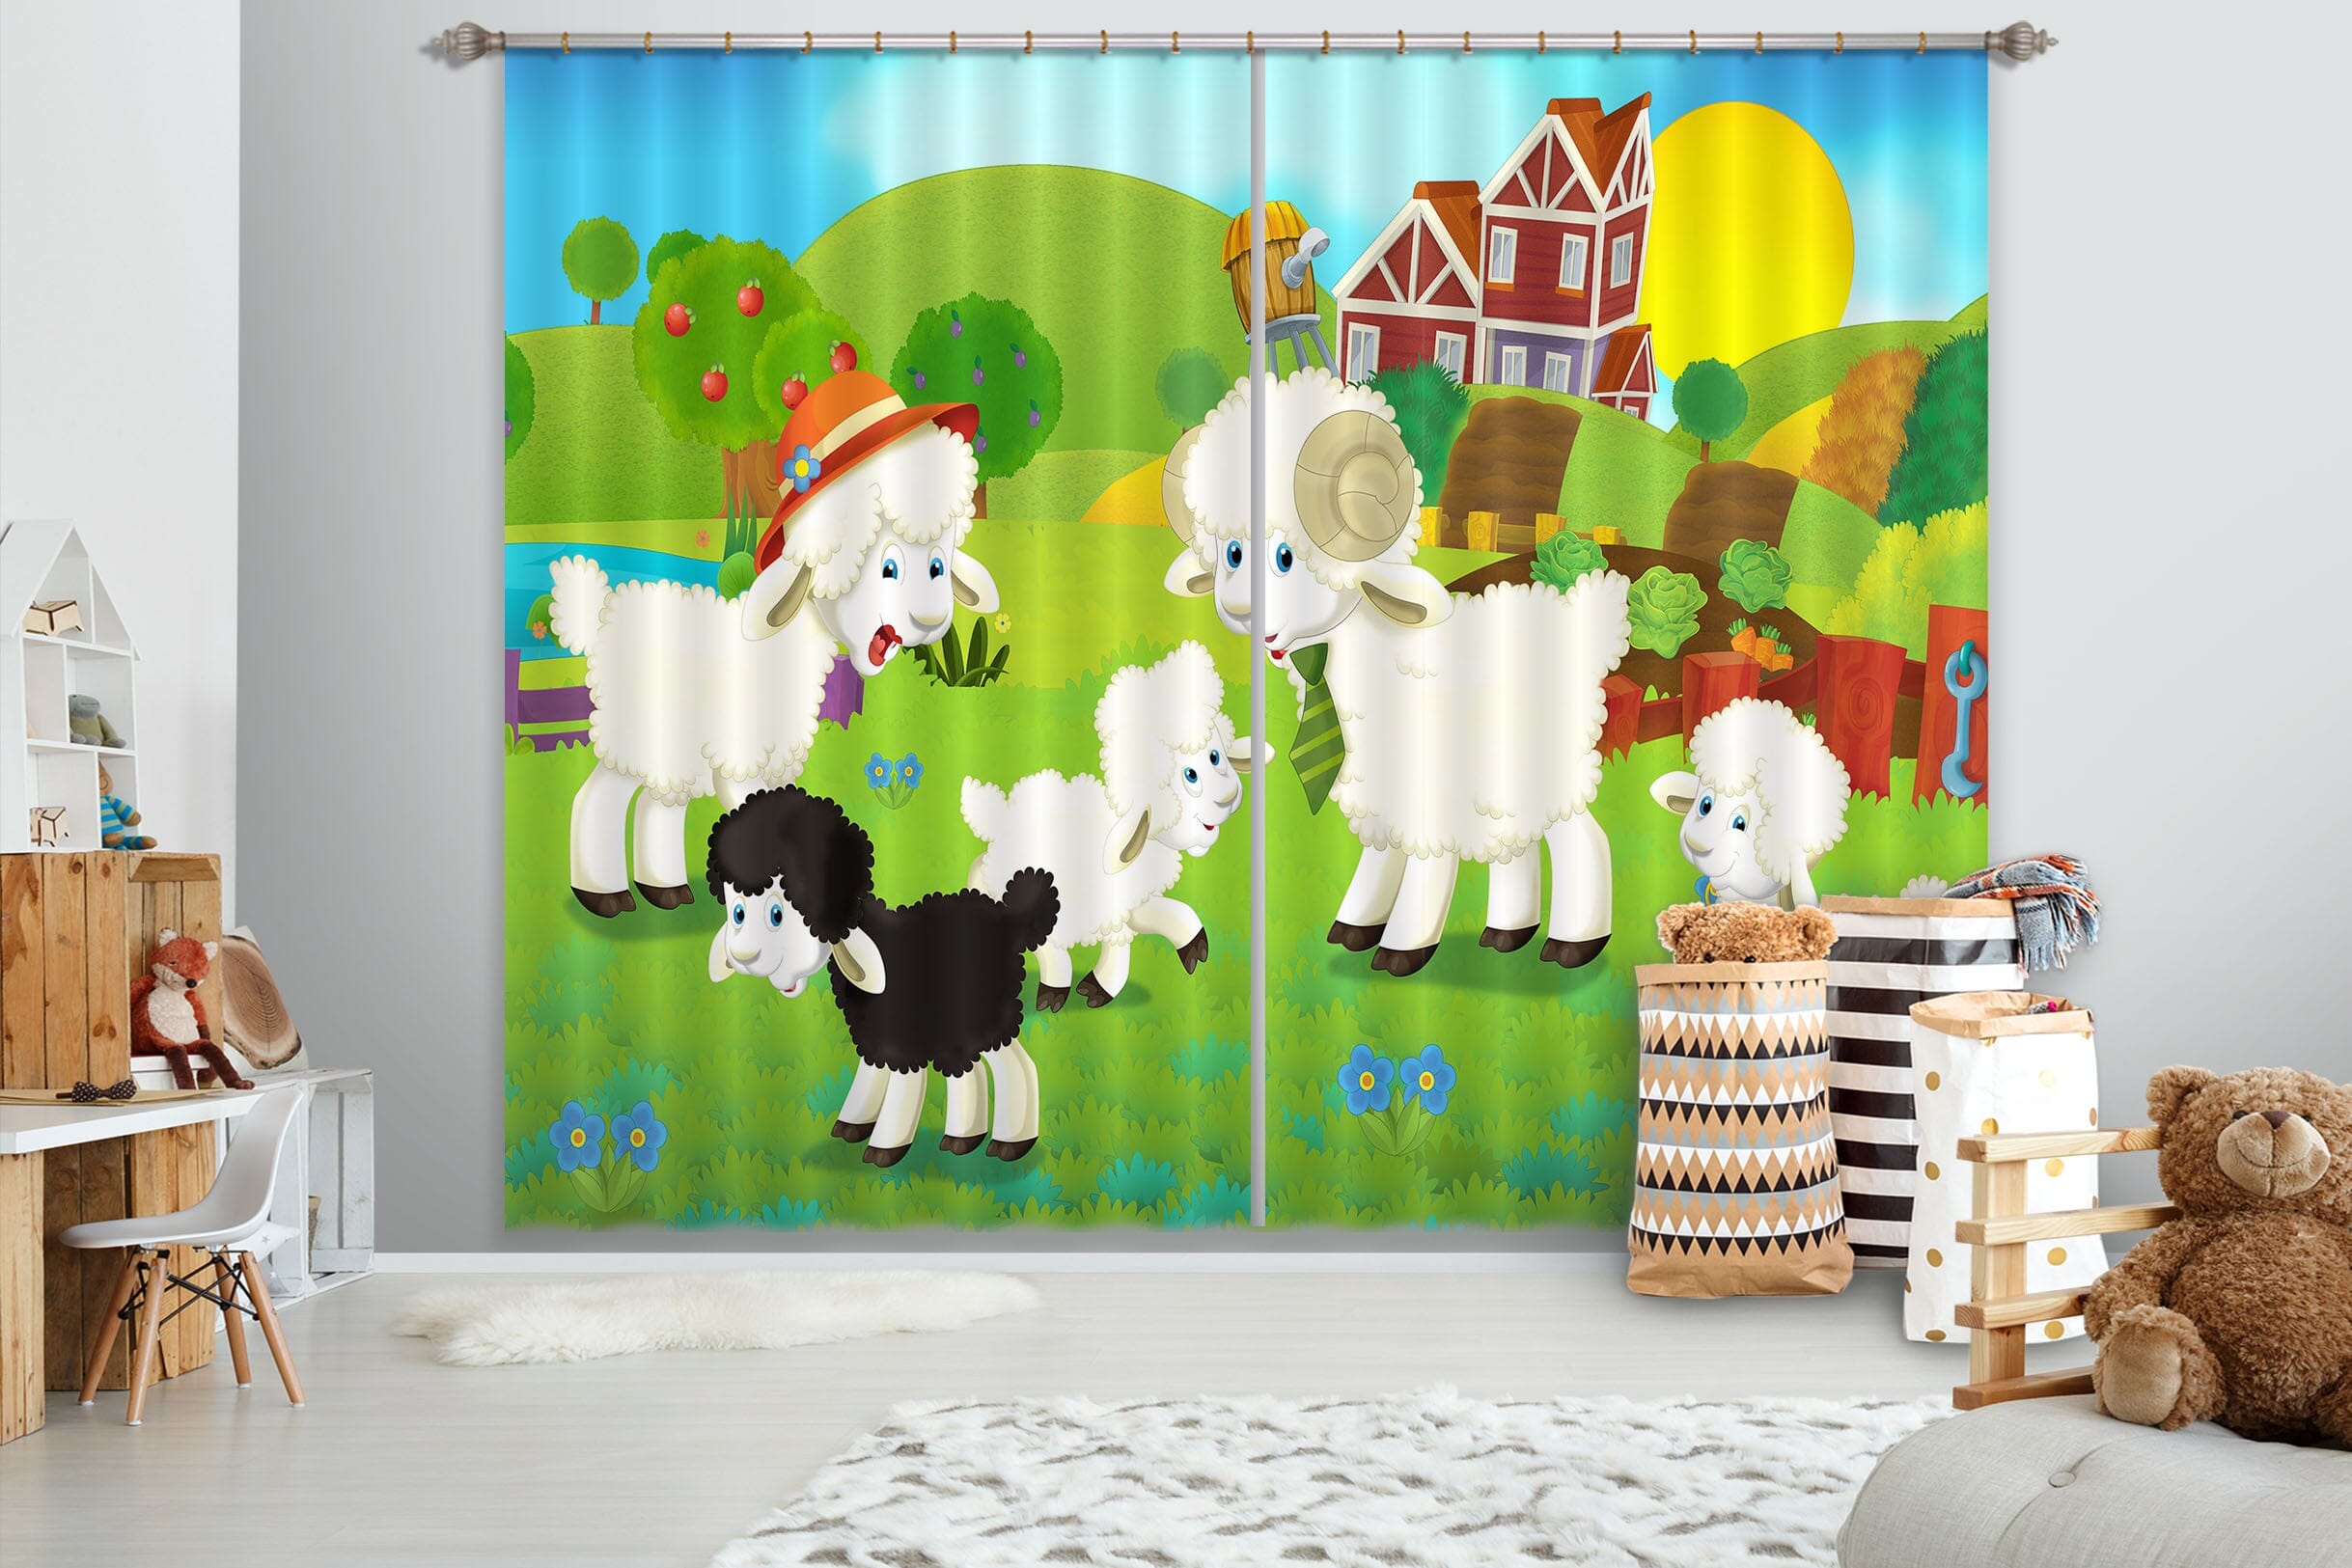 3D Cow Farm 713 Curtains Drapes Wallpaper AJ Wallpaper 